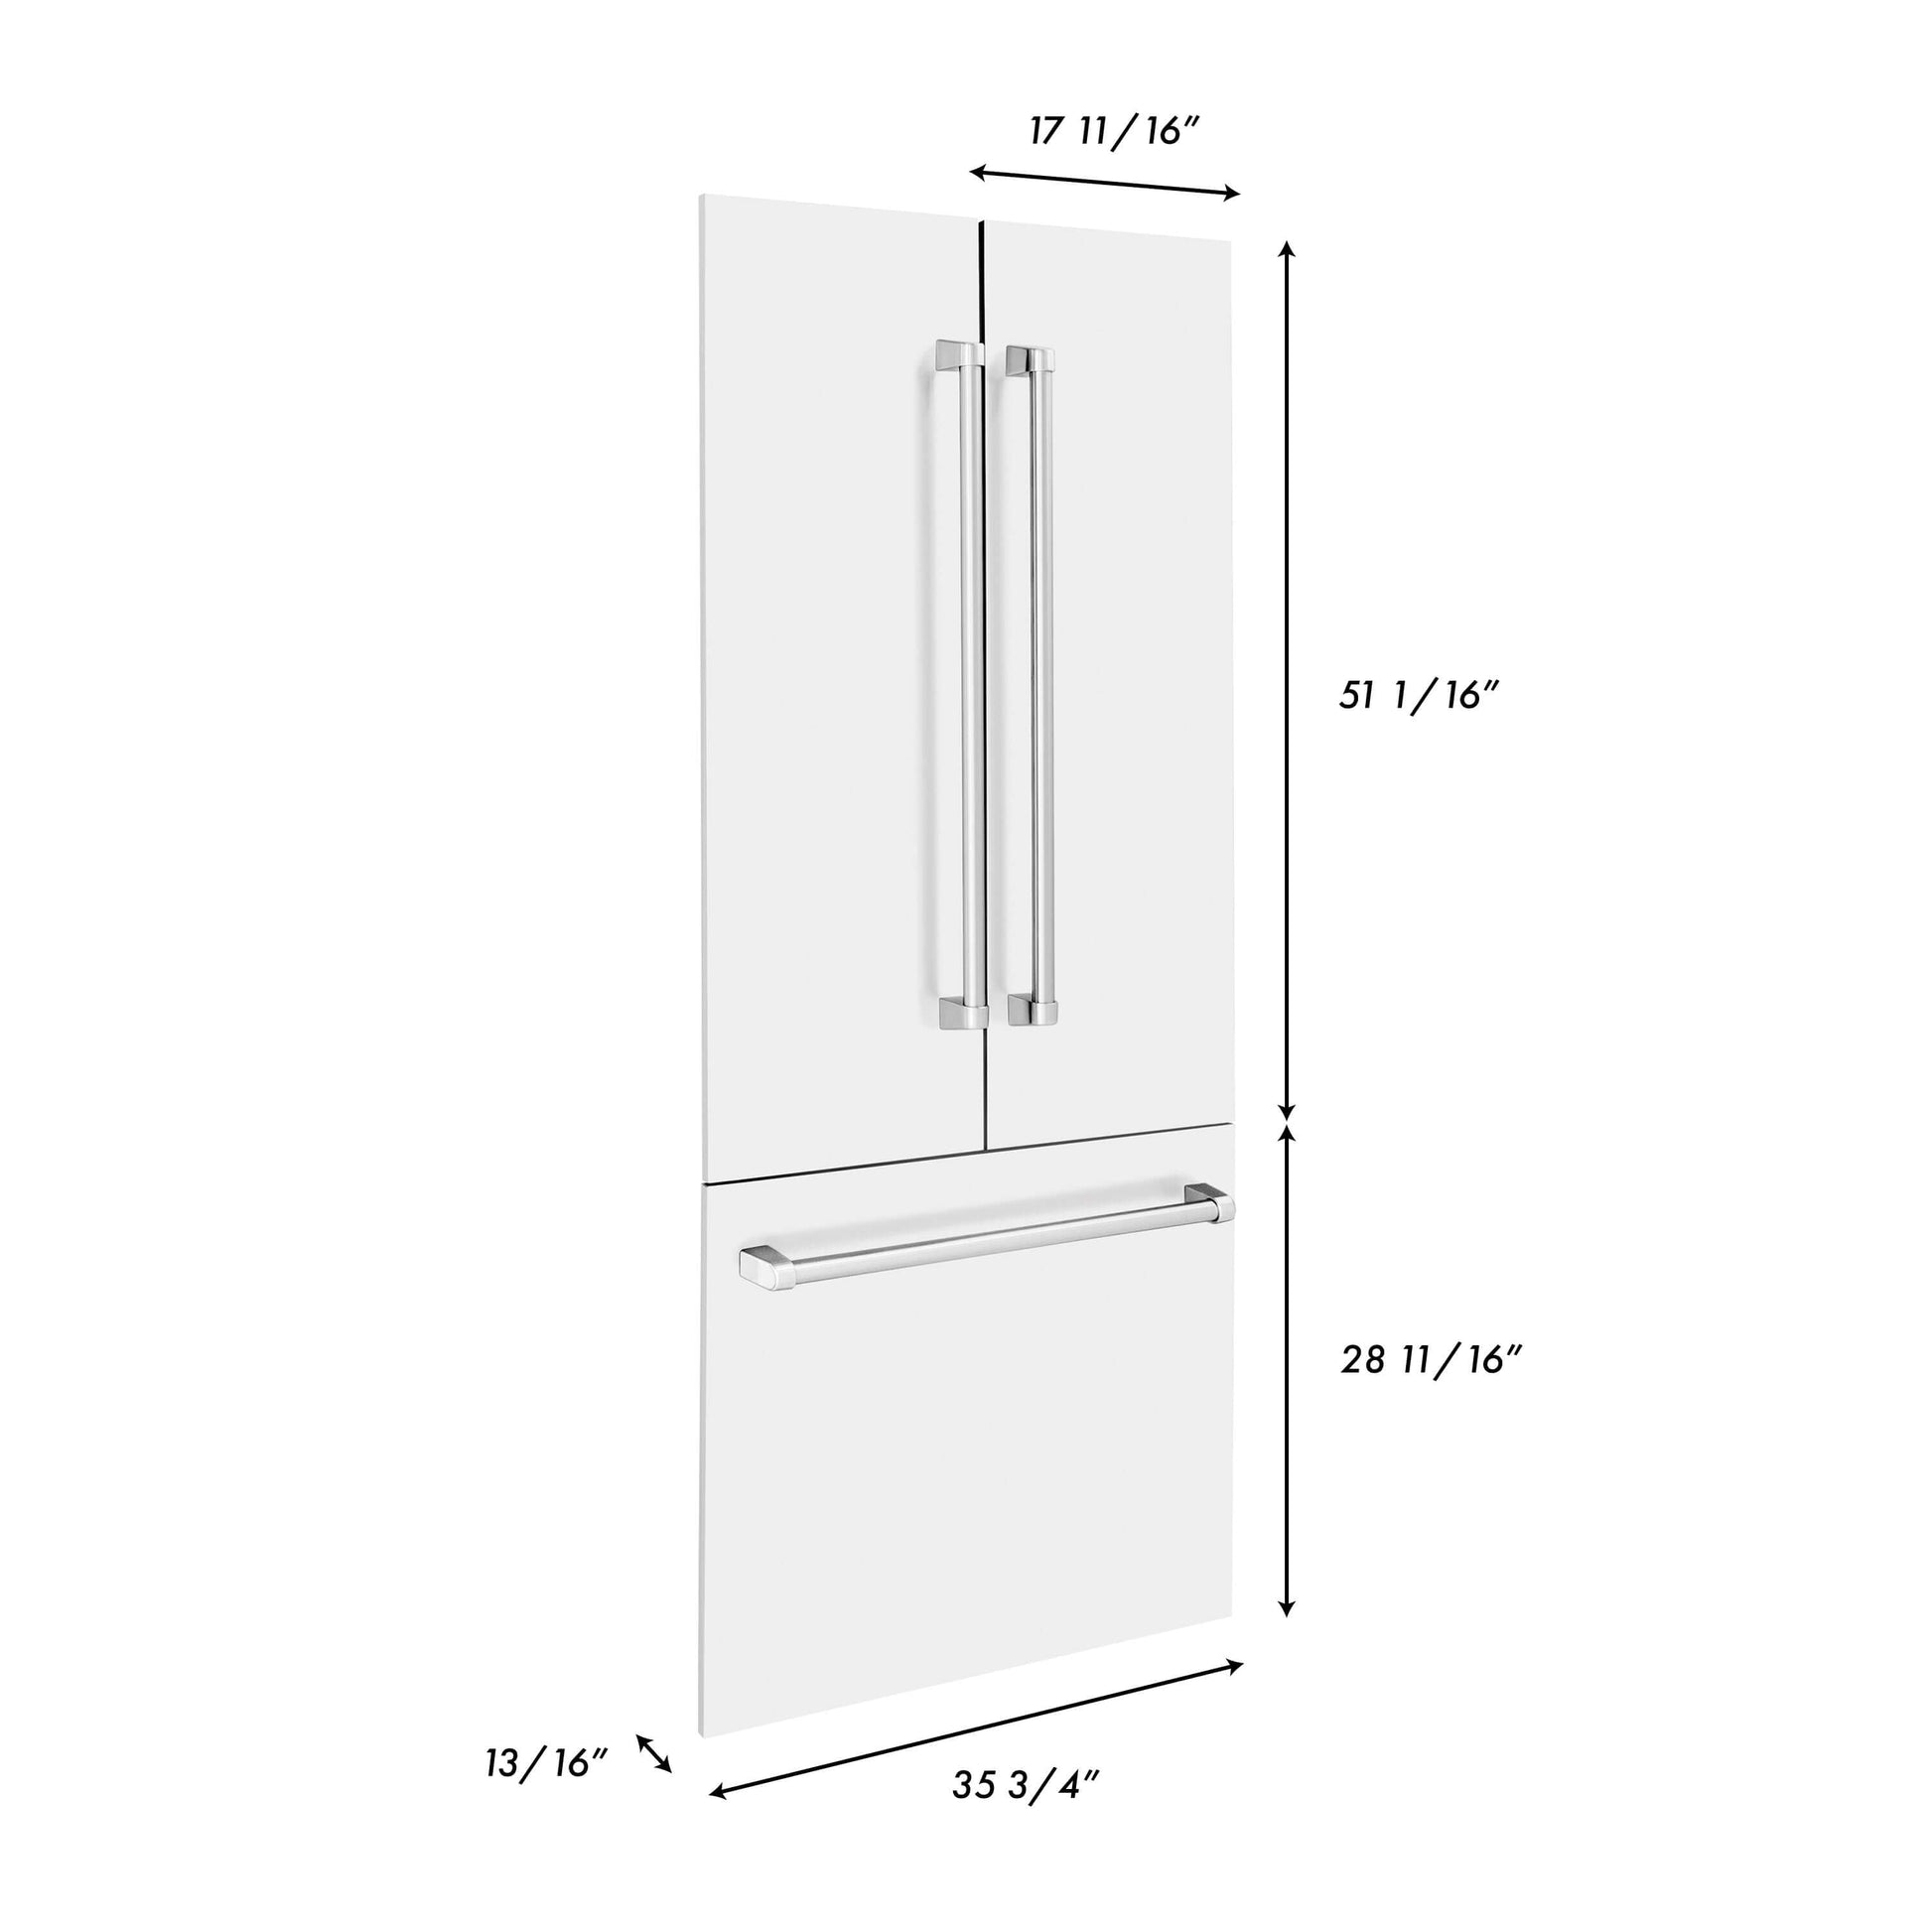 Panels & Handles Only - ZLINE 36" Refrigerator Panels in Matte White